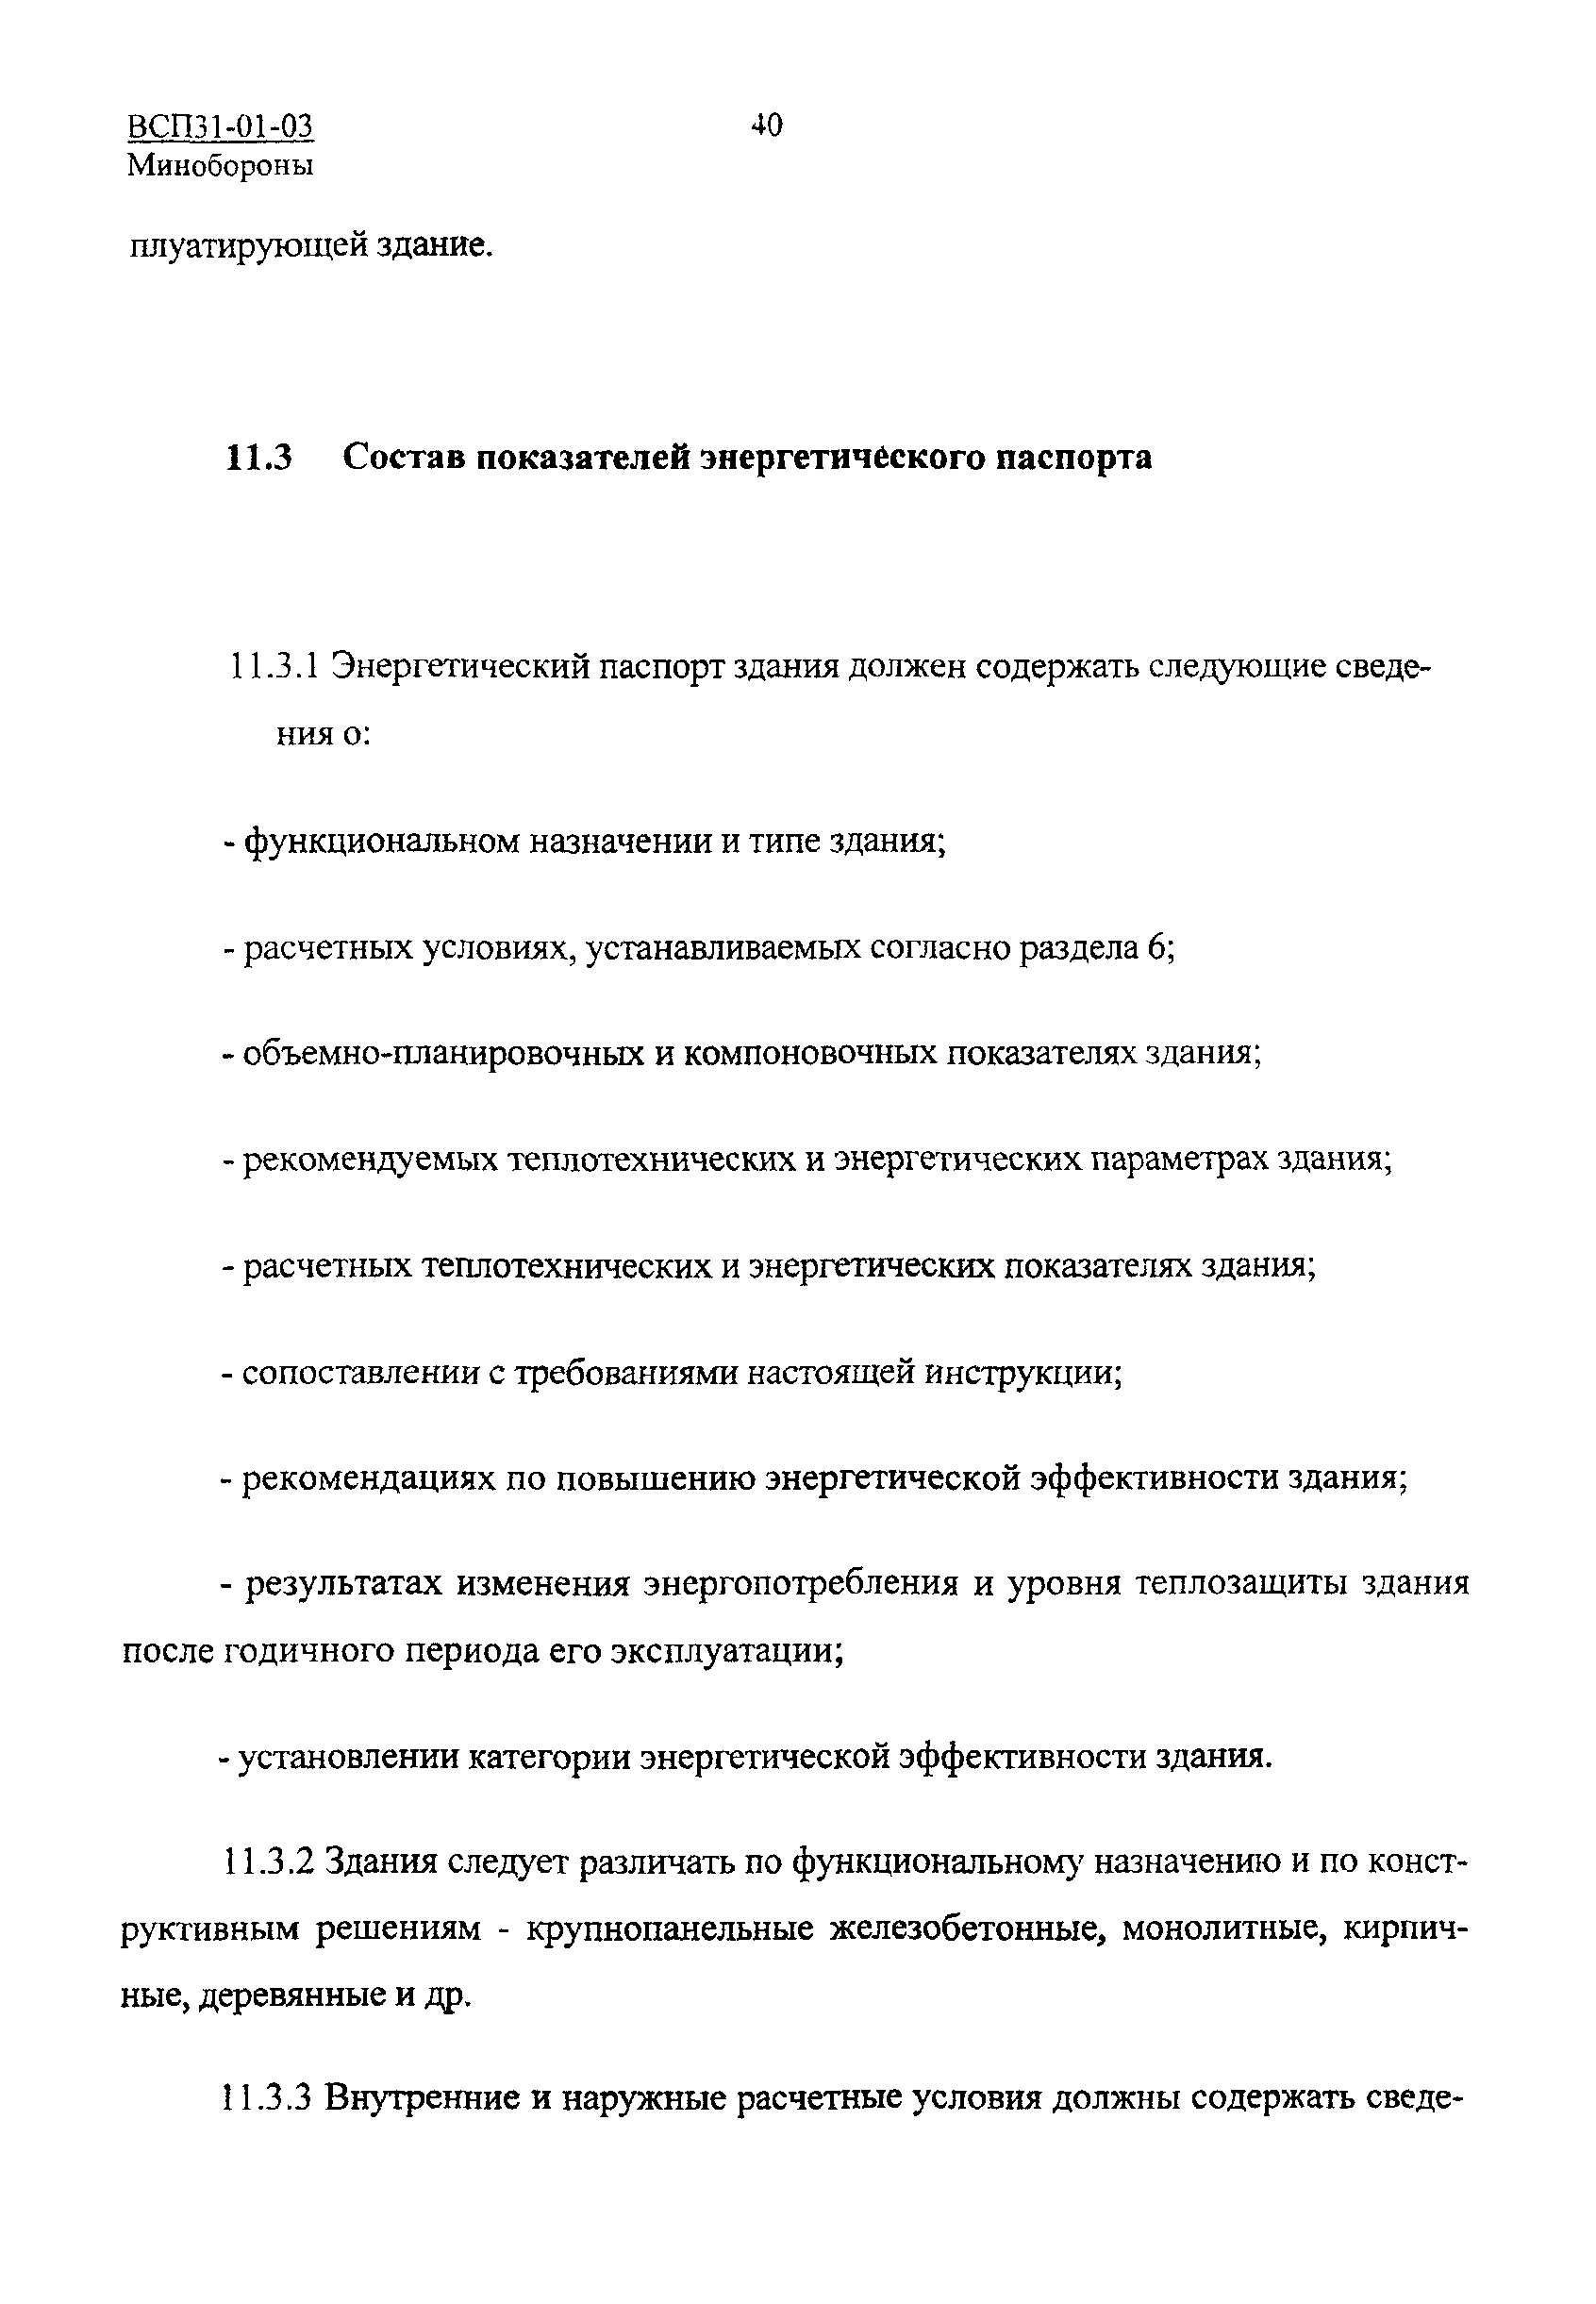 ВСП 31-01-03 МО РФ